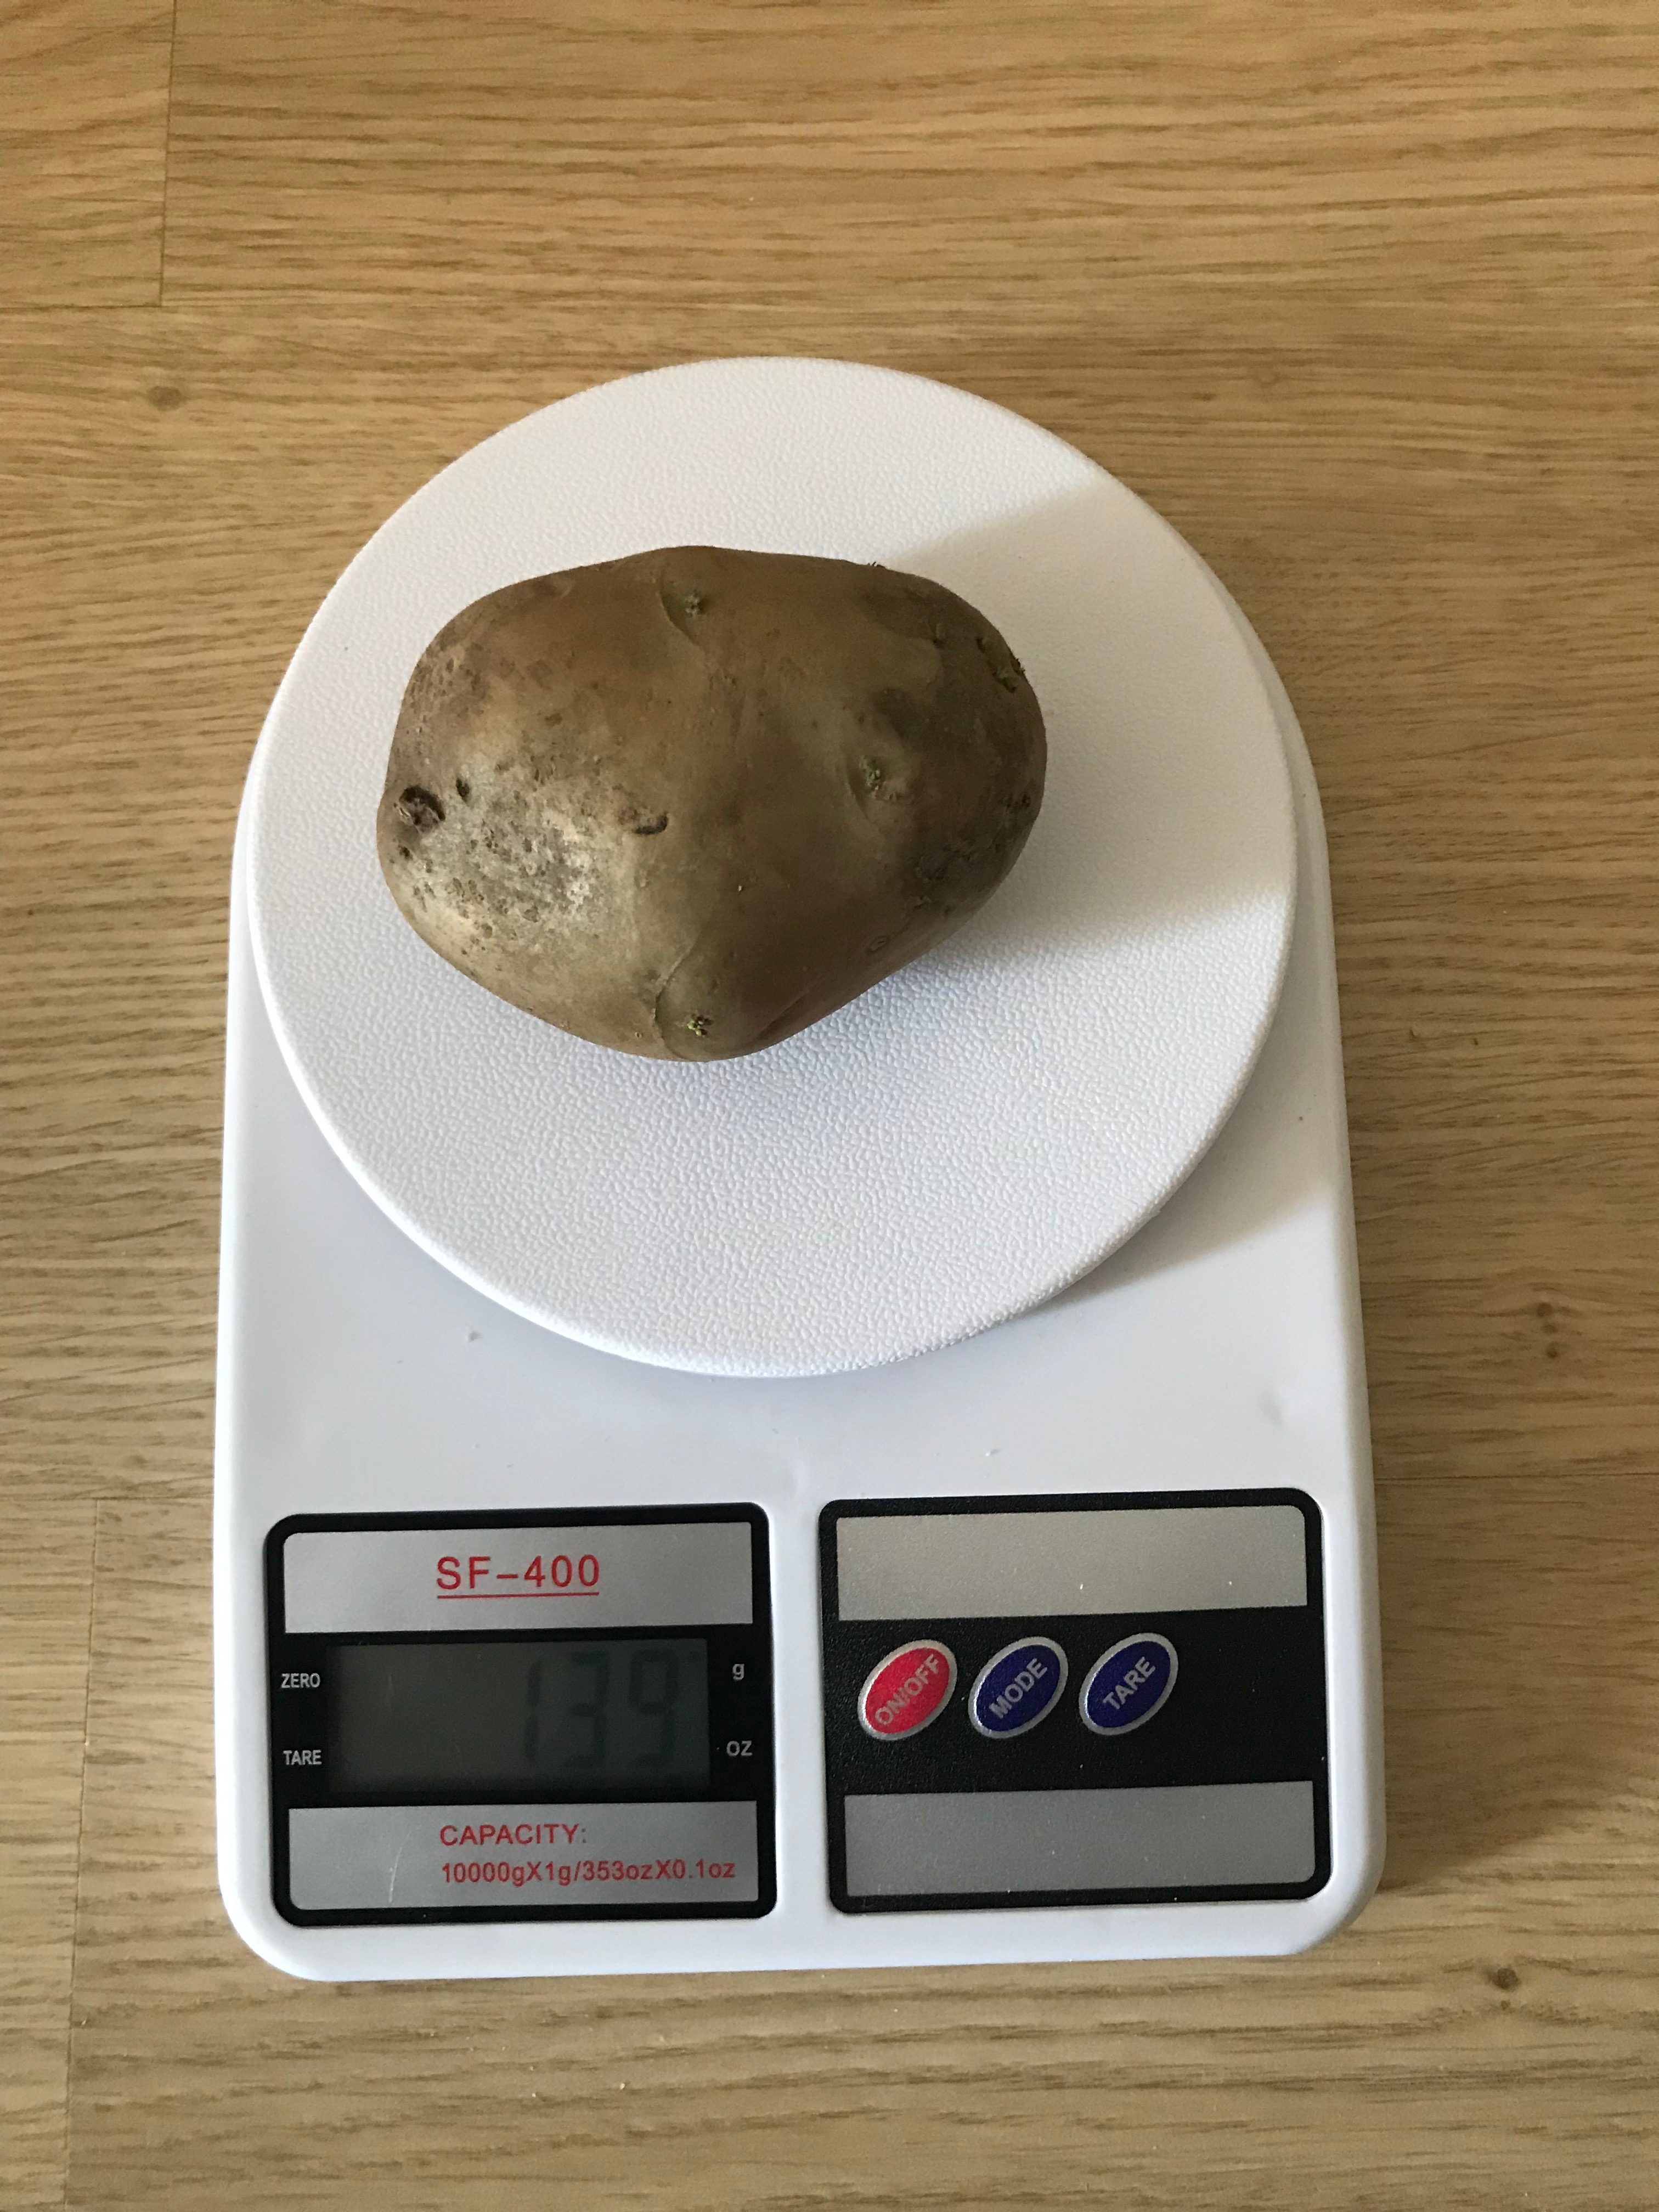 weight of 1 medium potato